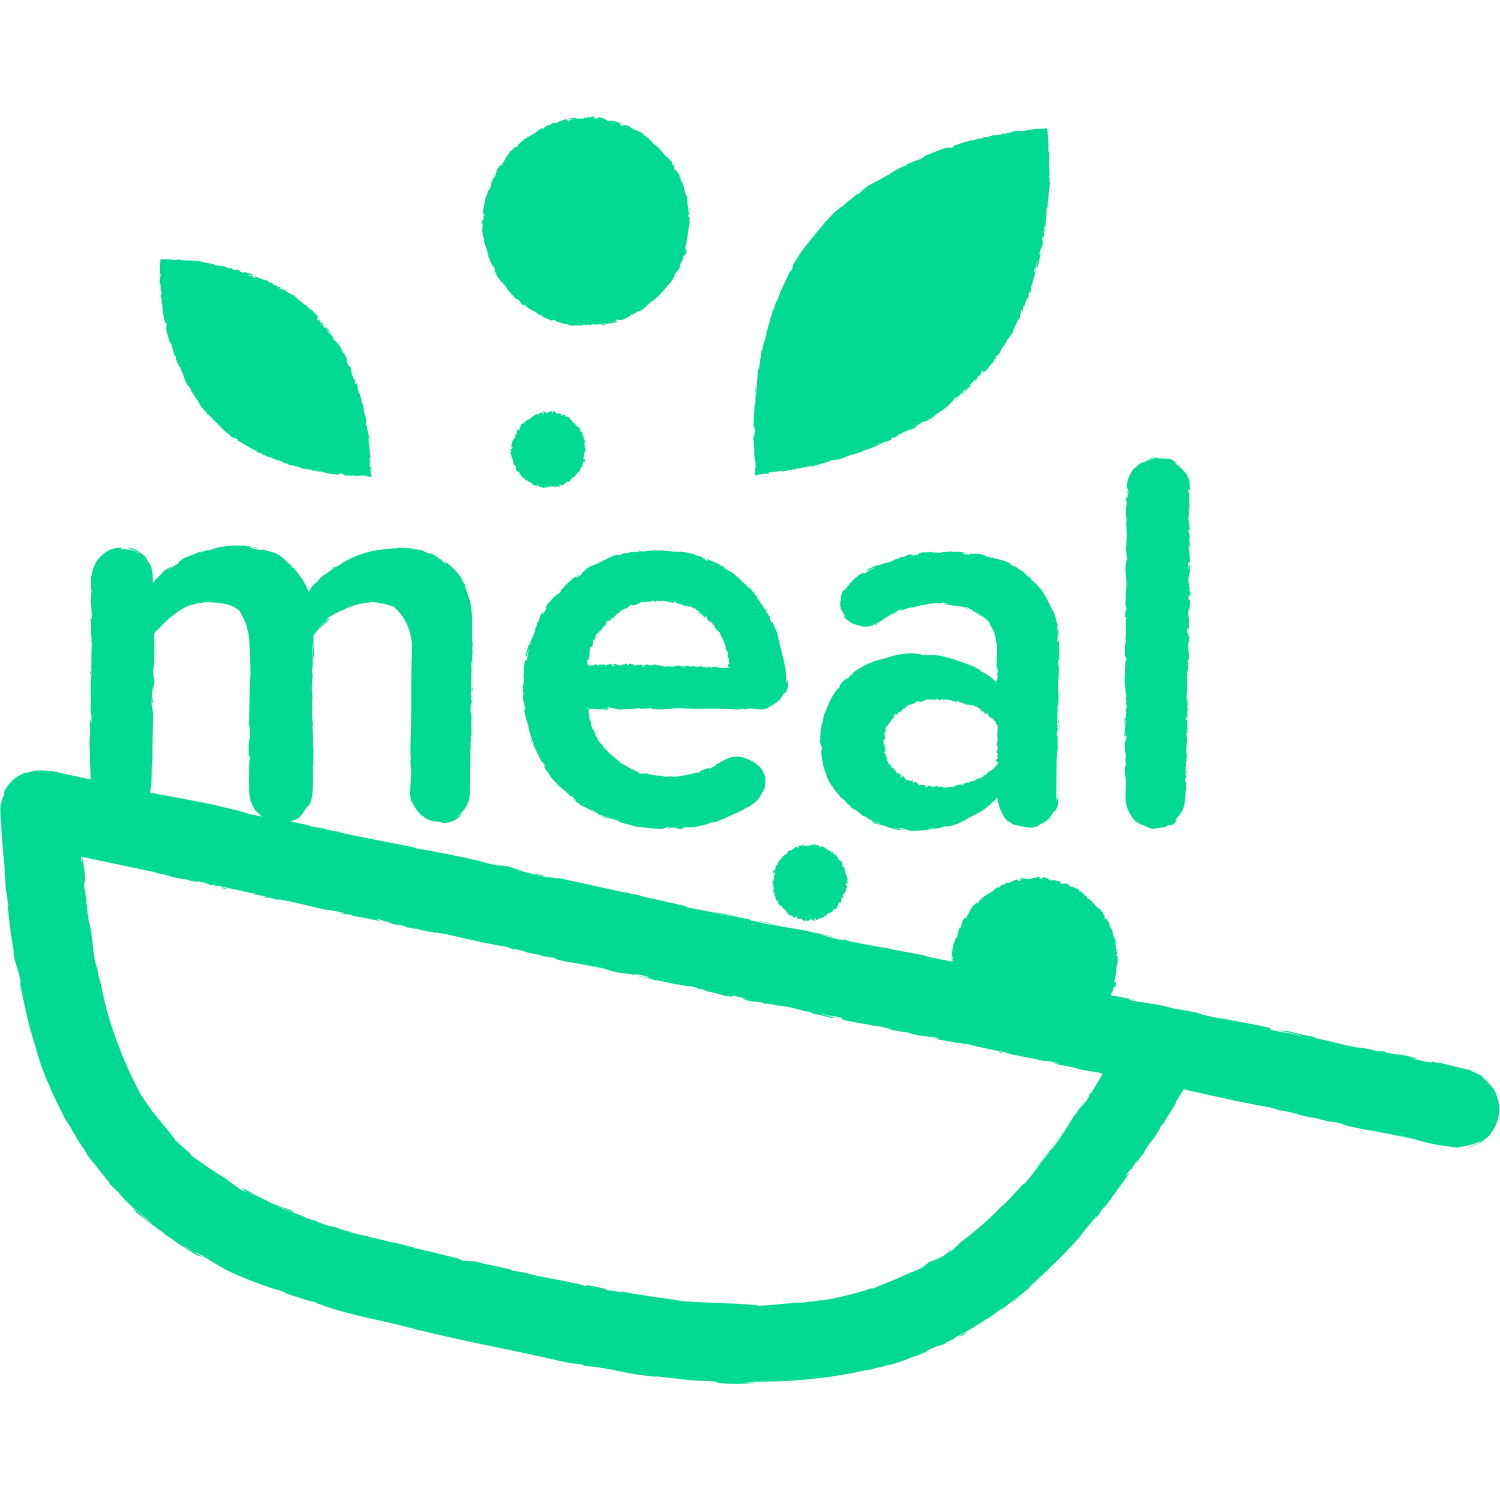 Meal logo